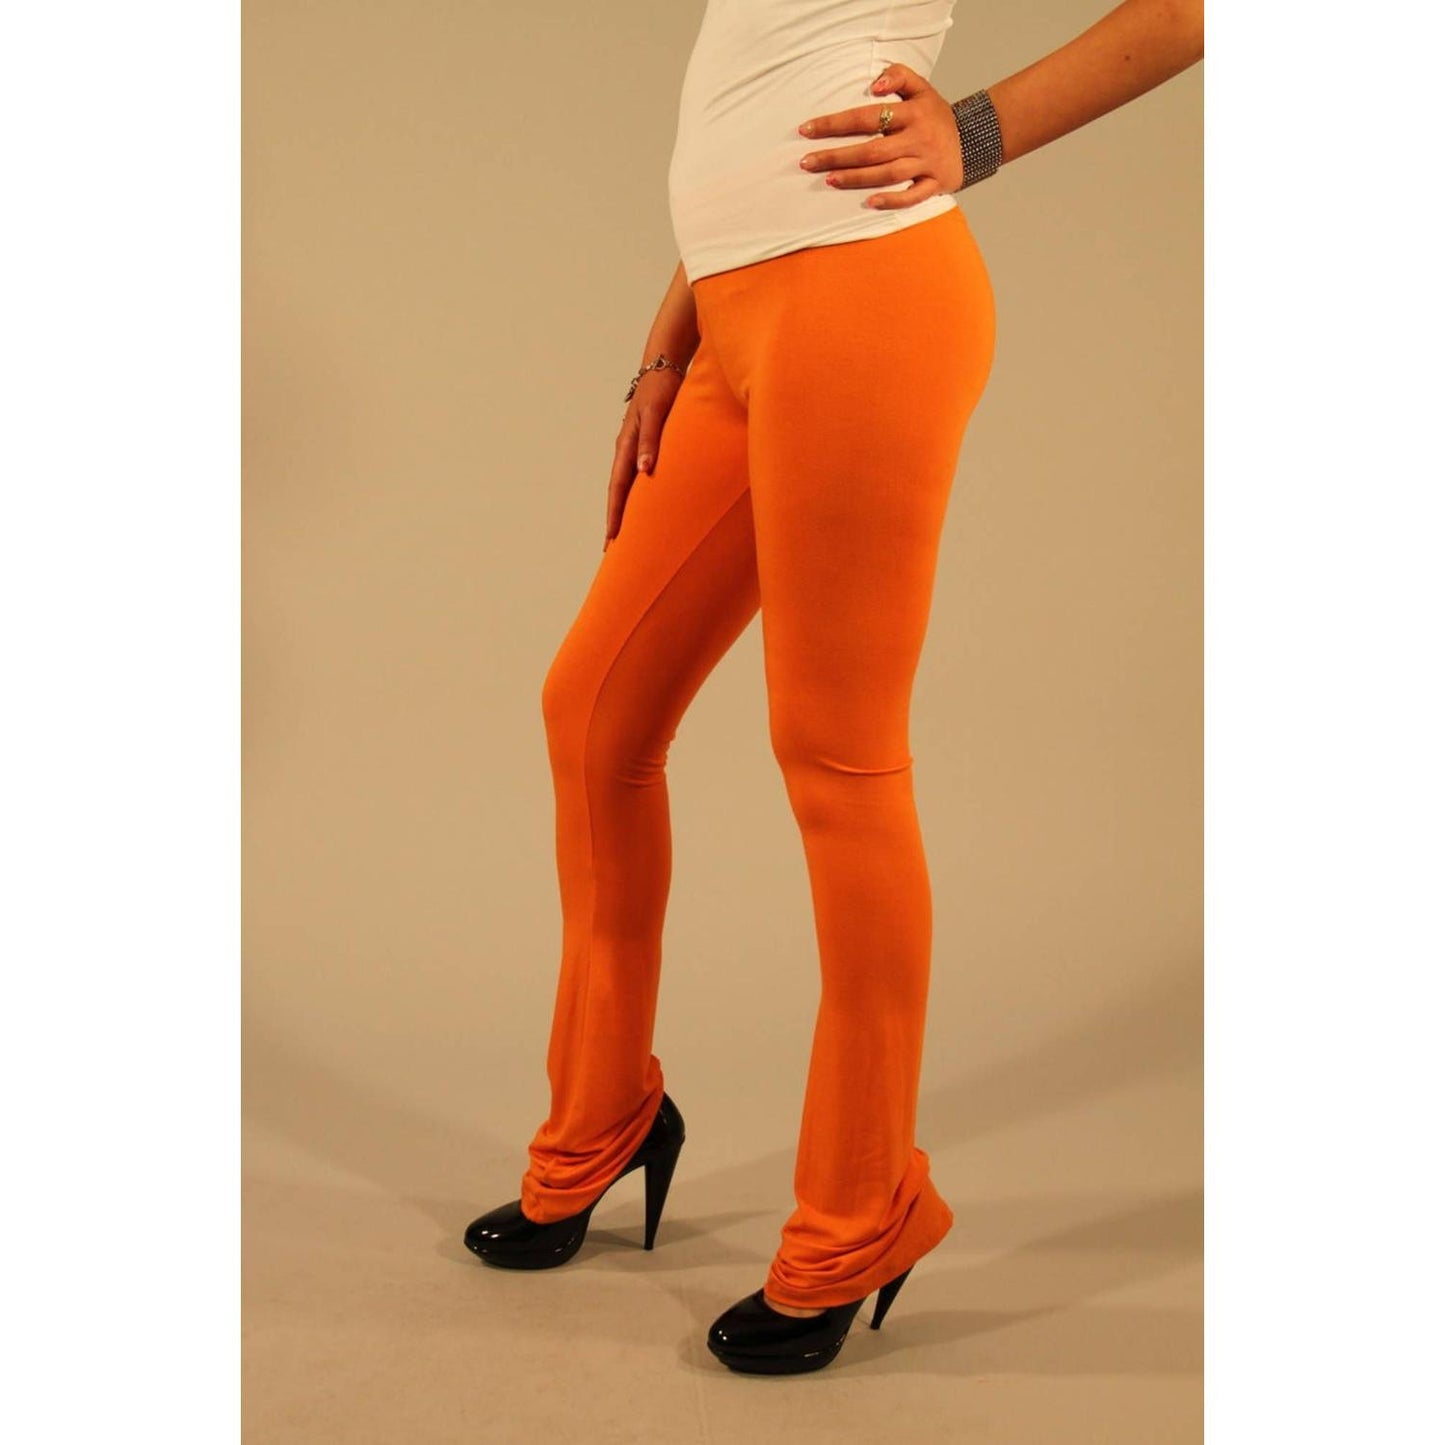 Patrizia Pepe Chic Orange Elastic Waist Leggings chic-orange-elastic-waist-leggings